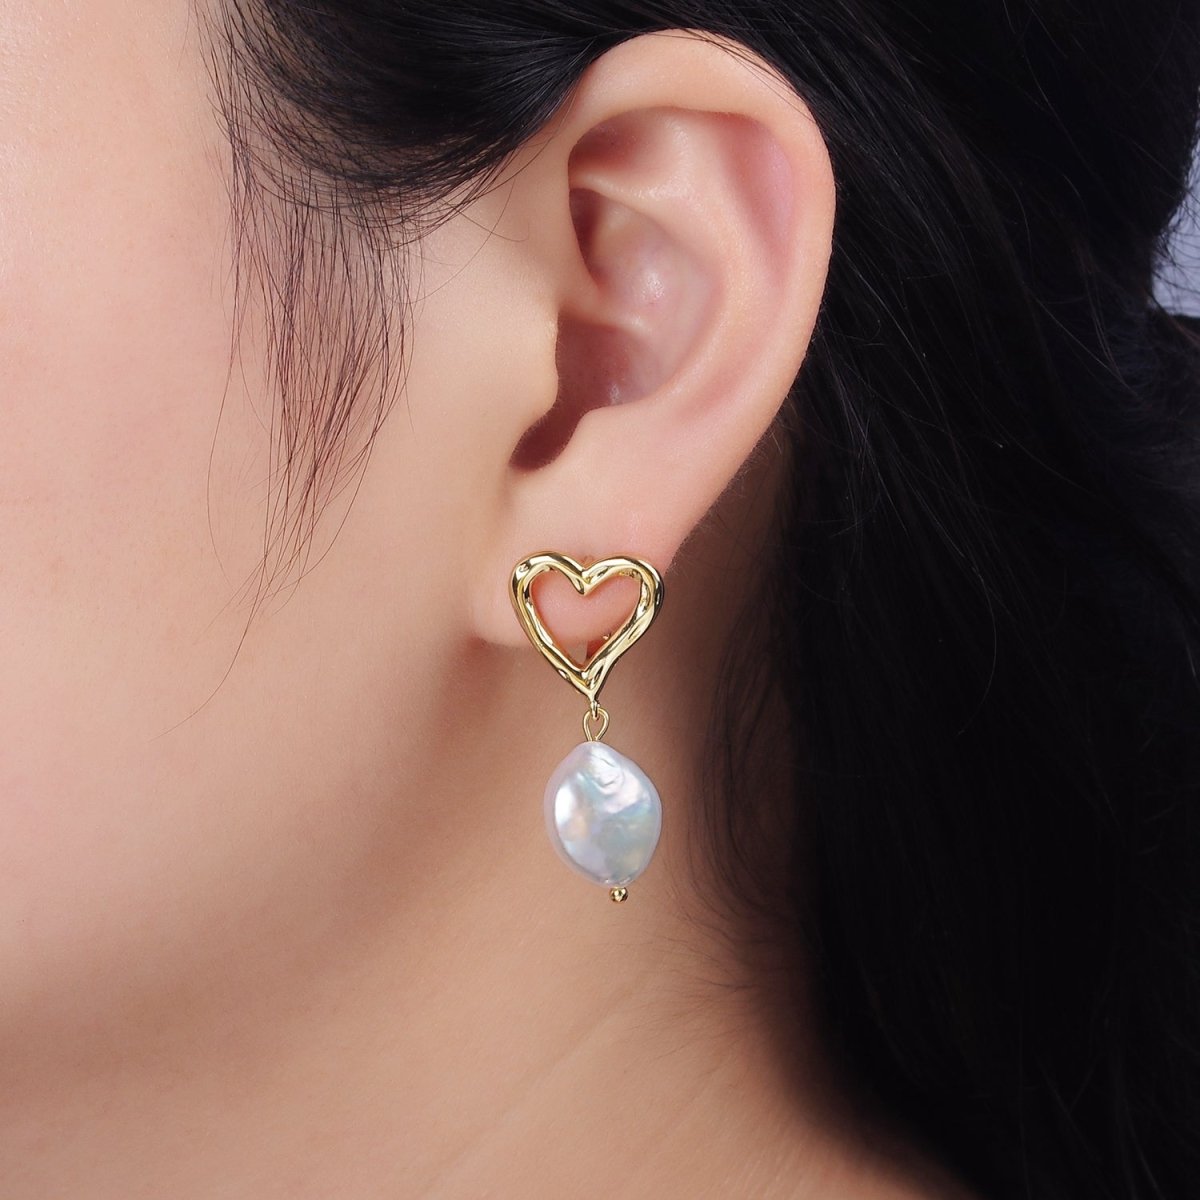 14K Gold Filled Freshwater Pearl Drop Dented Open Heart English Lock Earrings | AE689 - DLUXCA